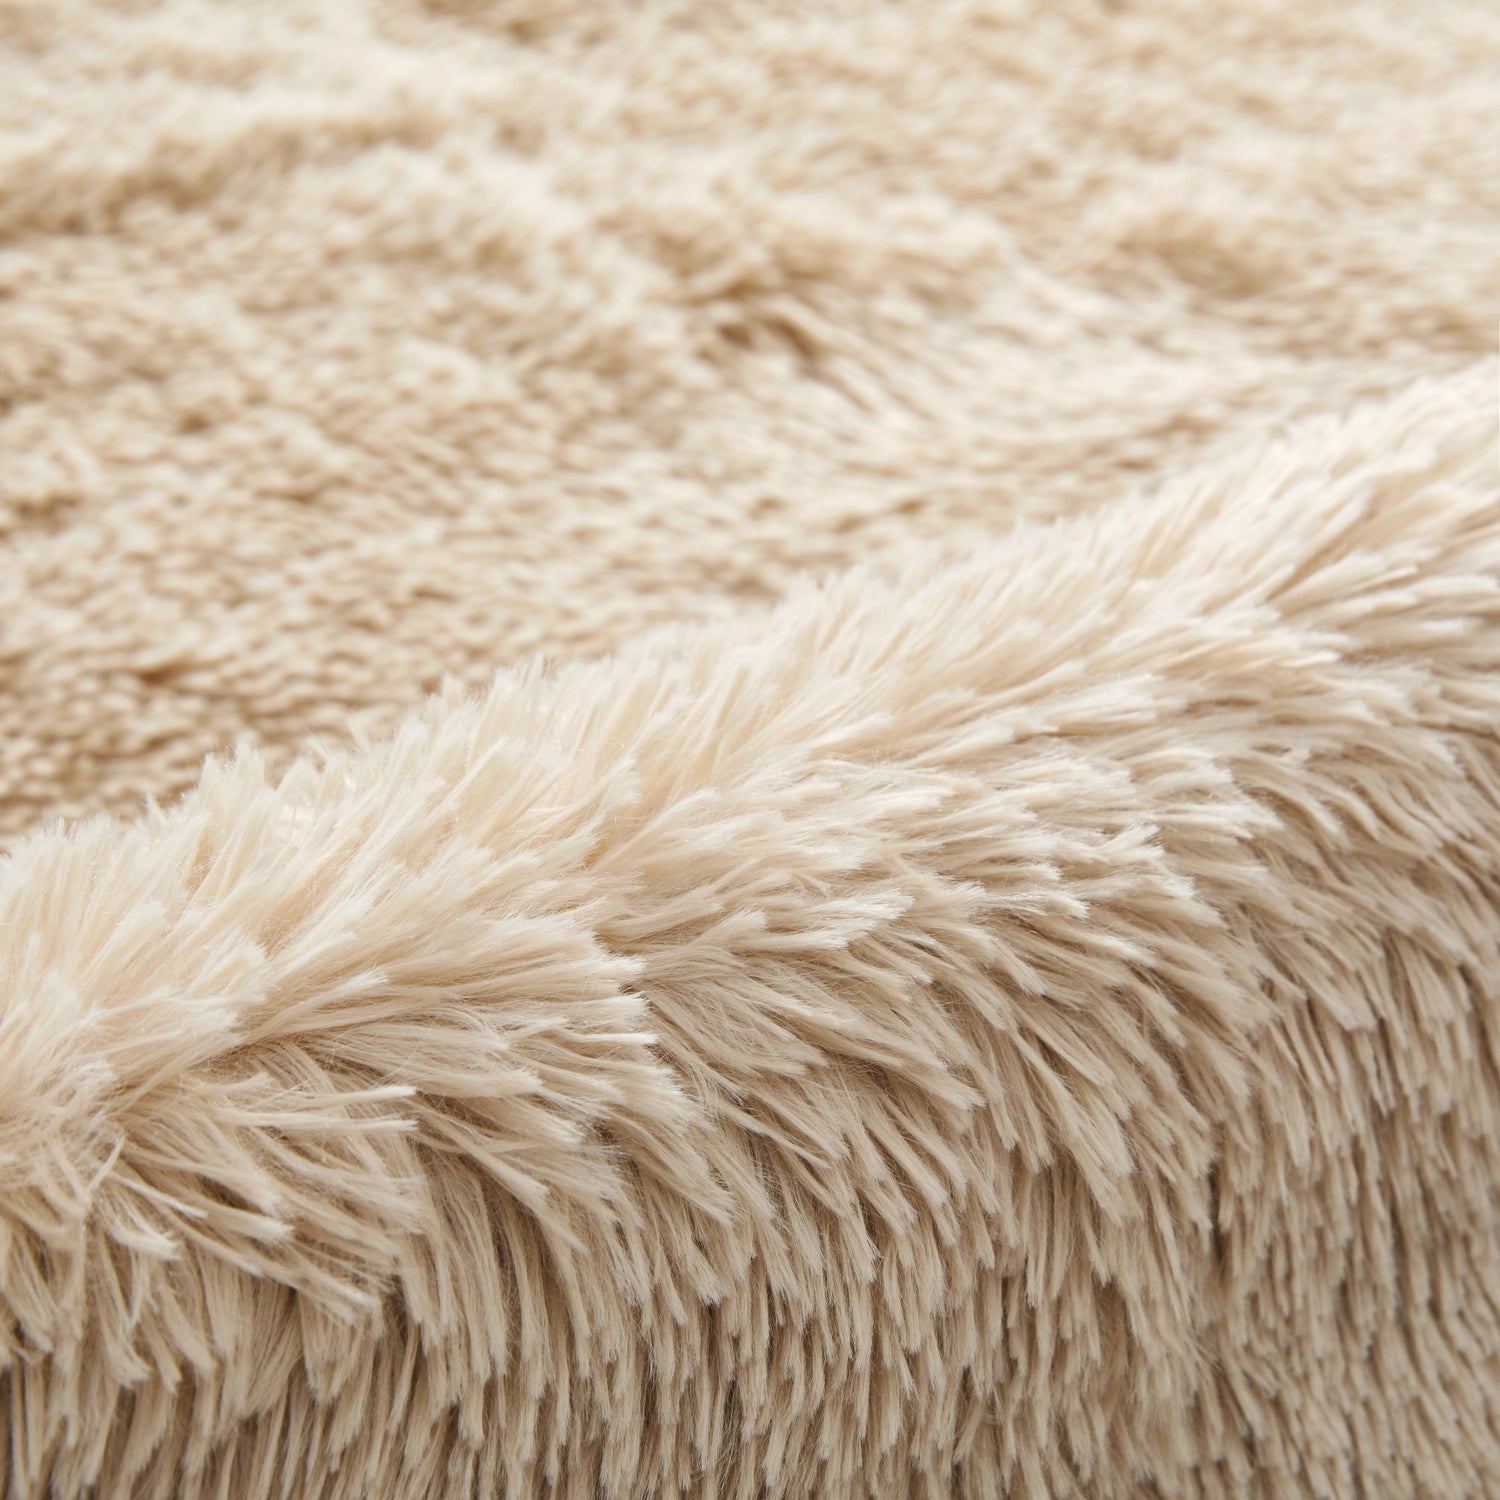 Beige Shaggy Rug Large Fluffy Carpet